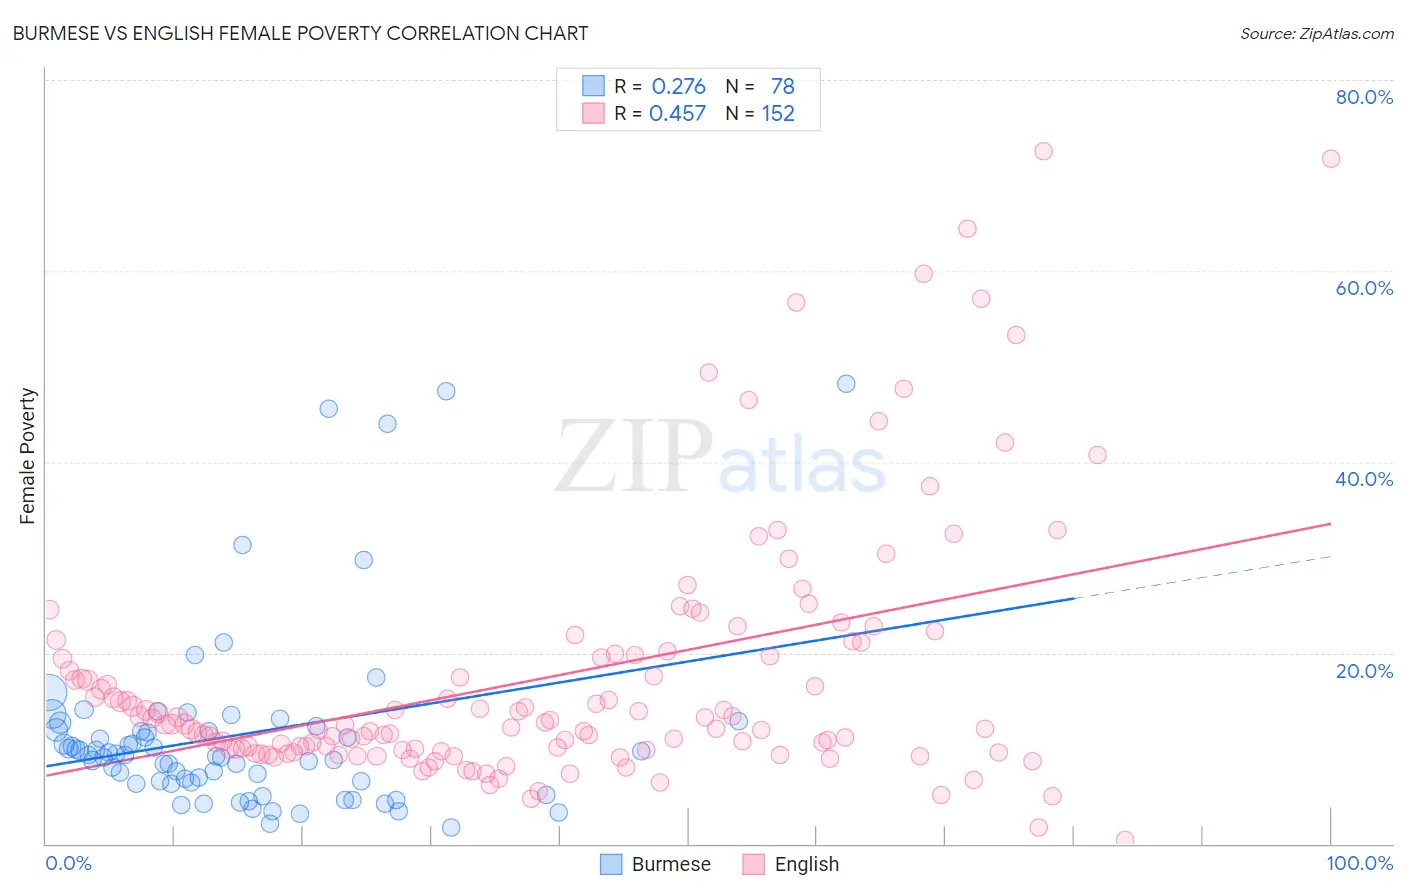 Burmese vs English Female Poverty